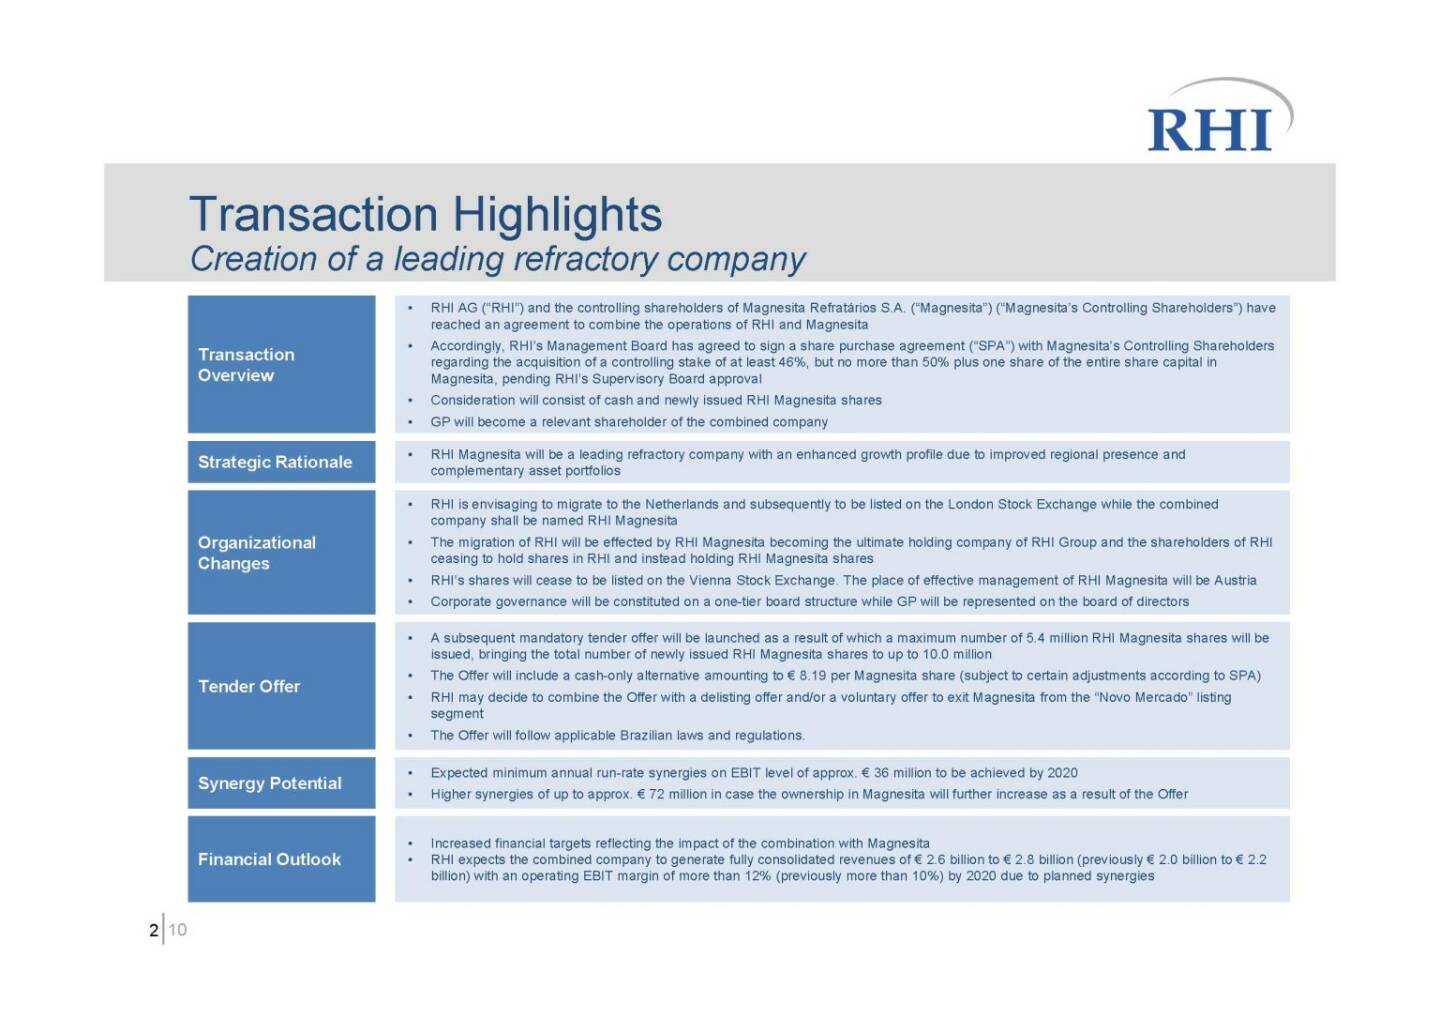 RHI - Transaction Highlights